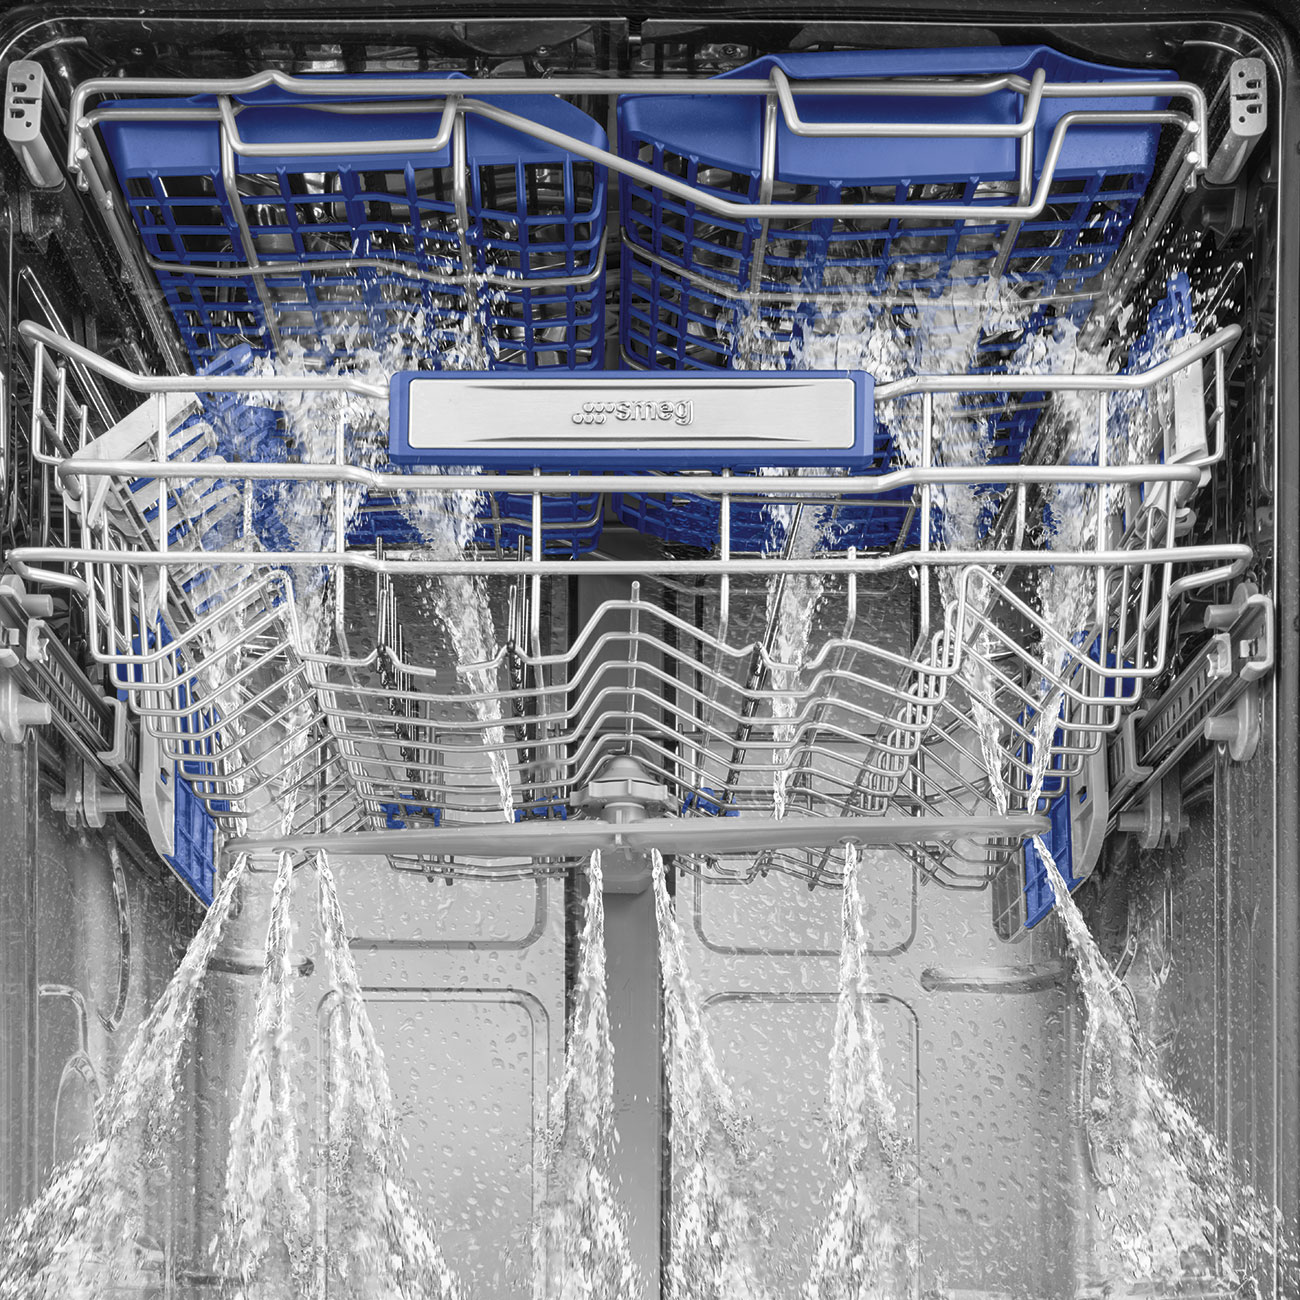 Free-standing dishwasher 60 cm Smeg_9